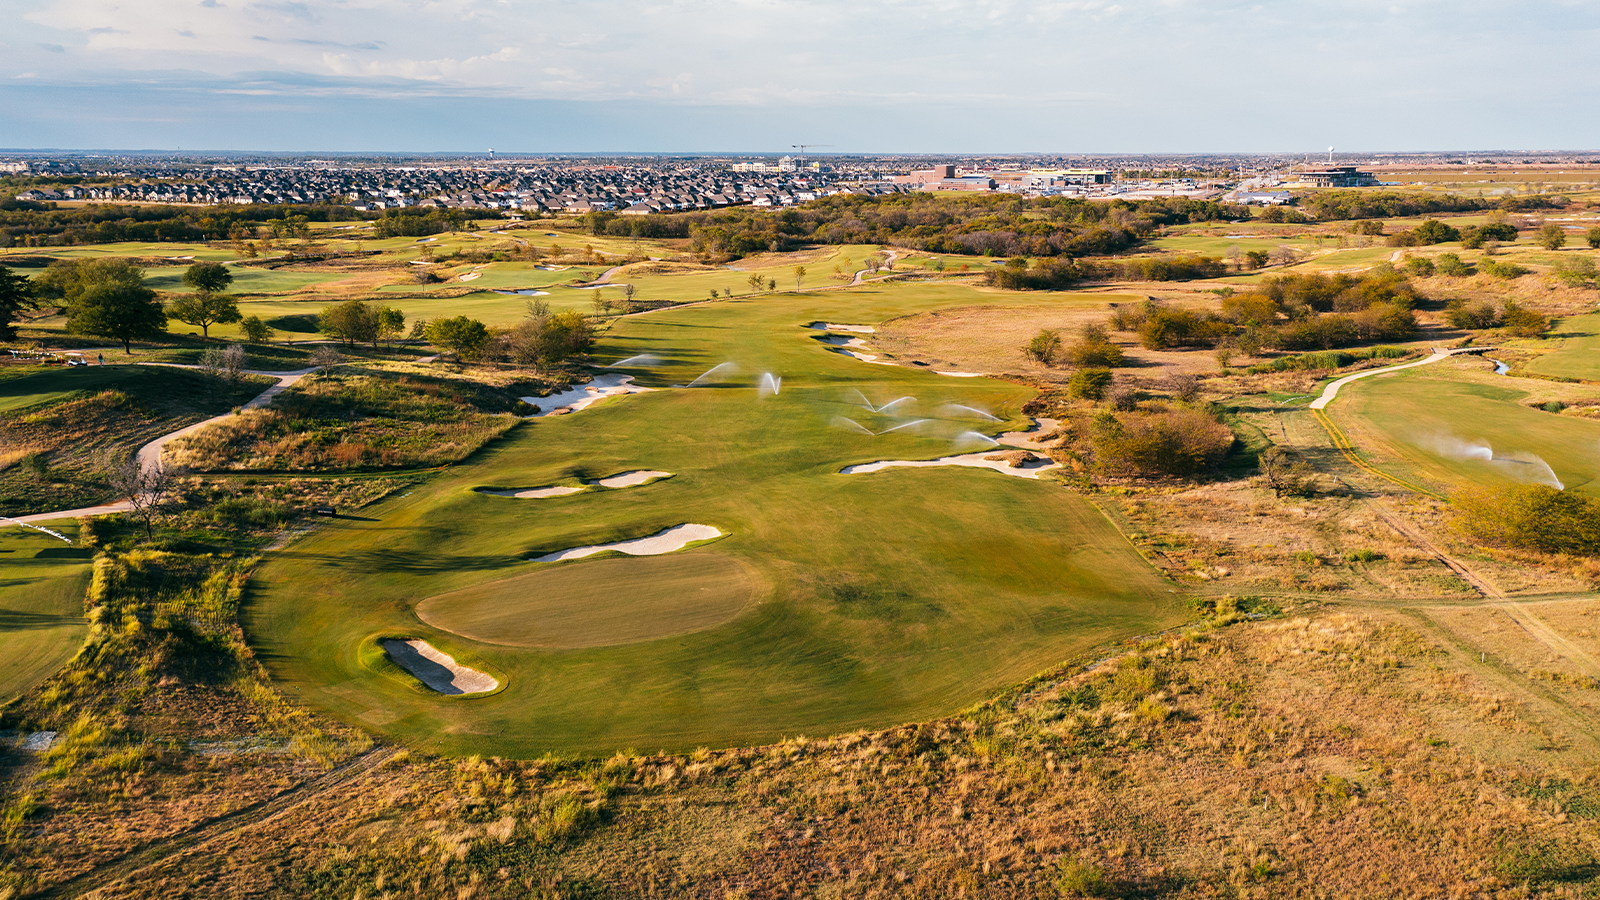 A view from high above PGA Frisco. (Photo by Matt Hahn/PGA of America)